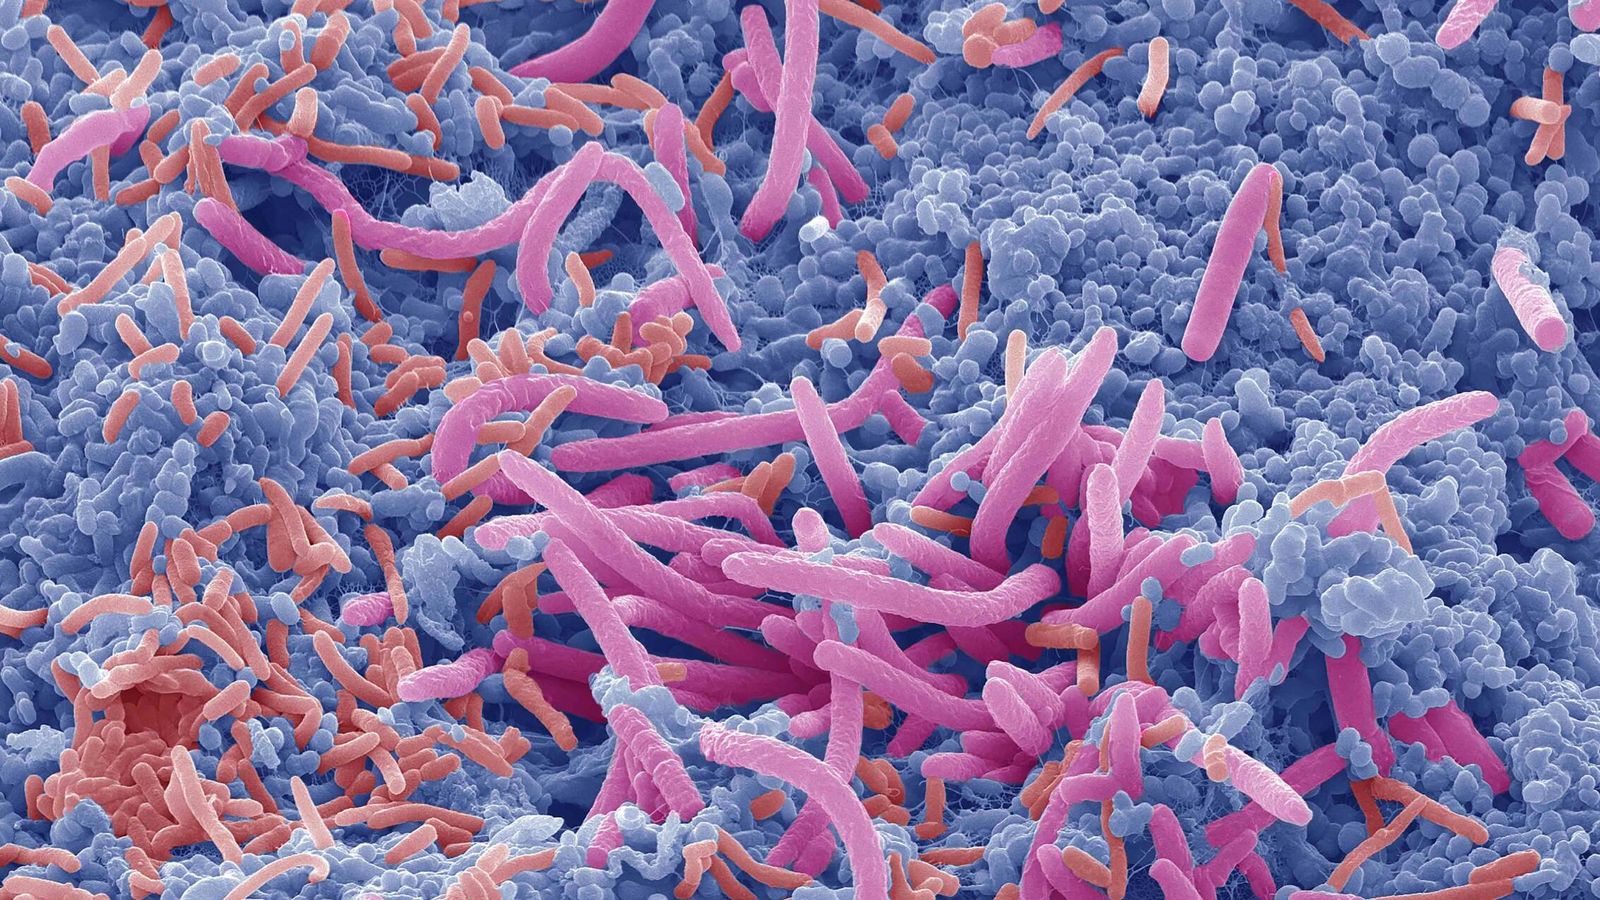 Reproducción de microbiota intestinal. (Science Photo Library)